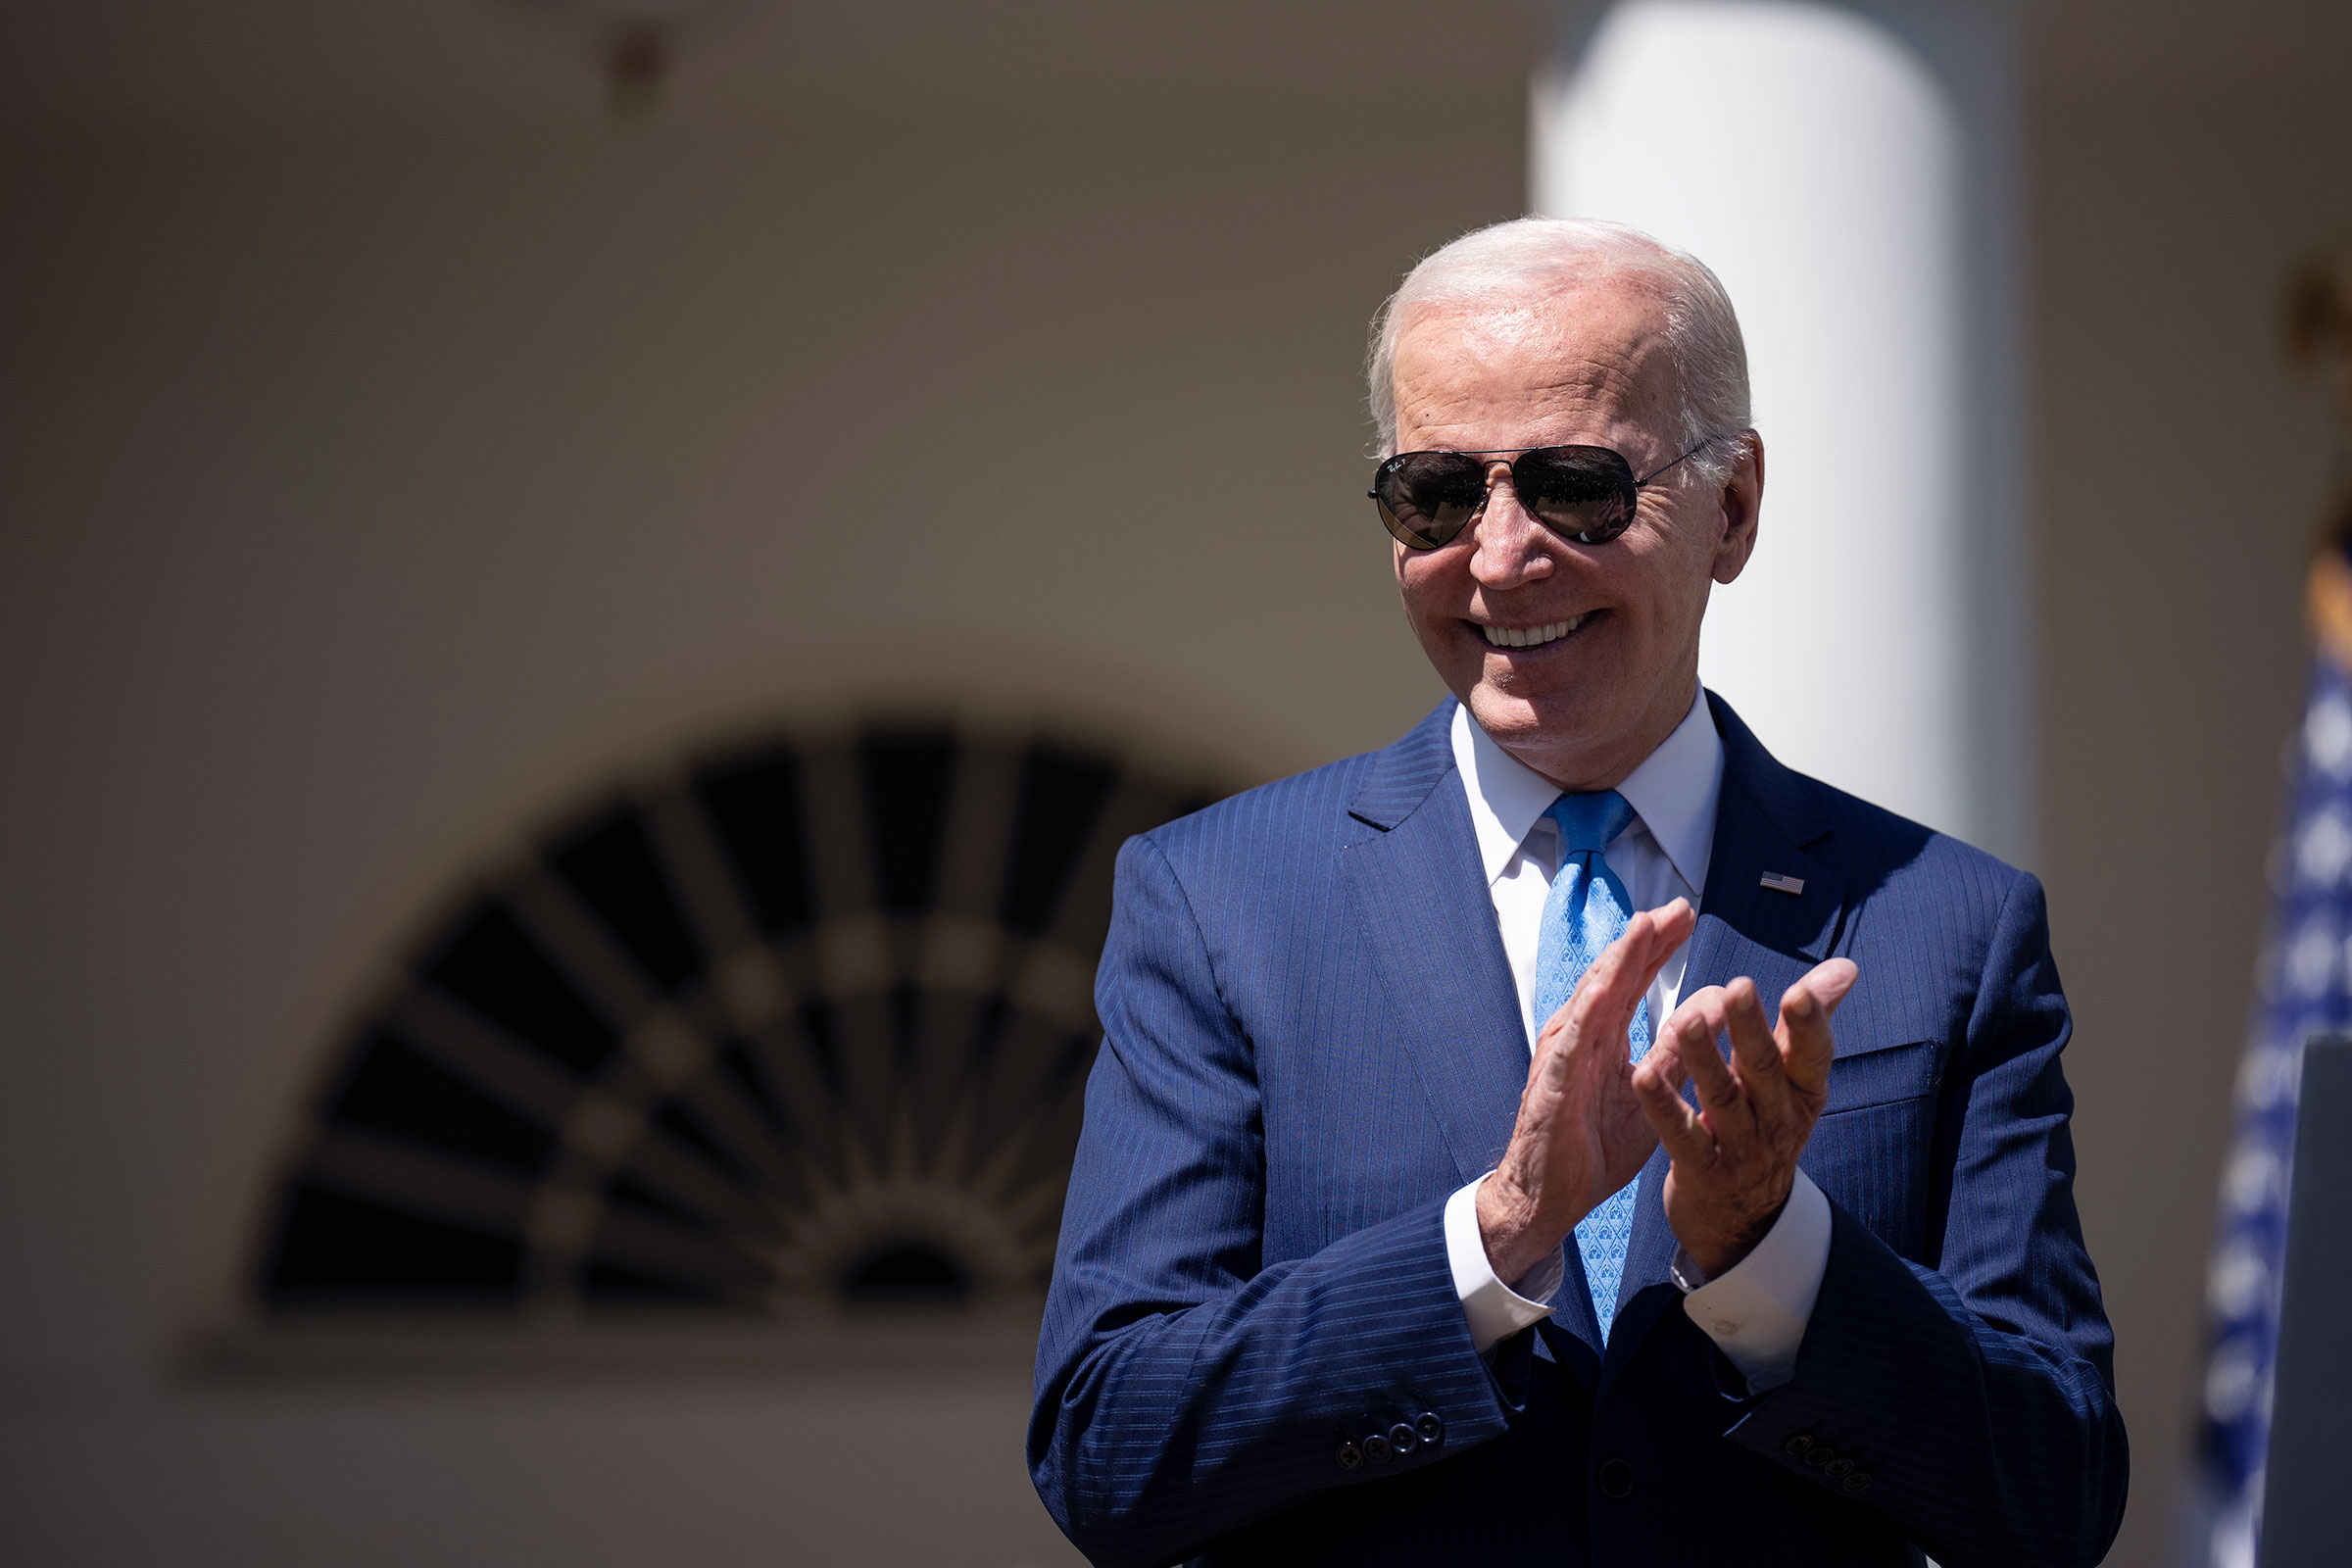 Joe Biden claps while wearing aviator sunglasses.